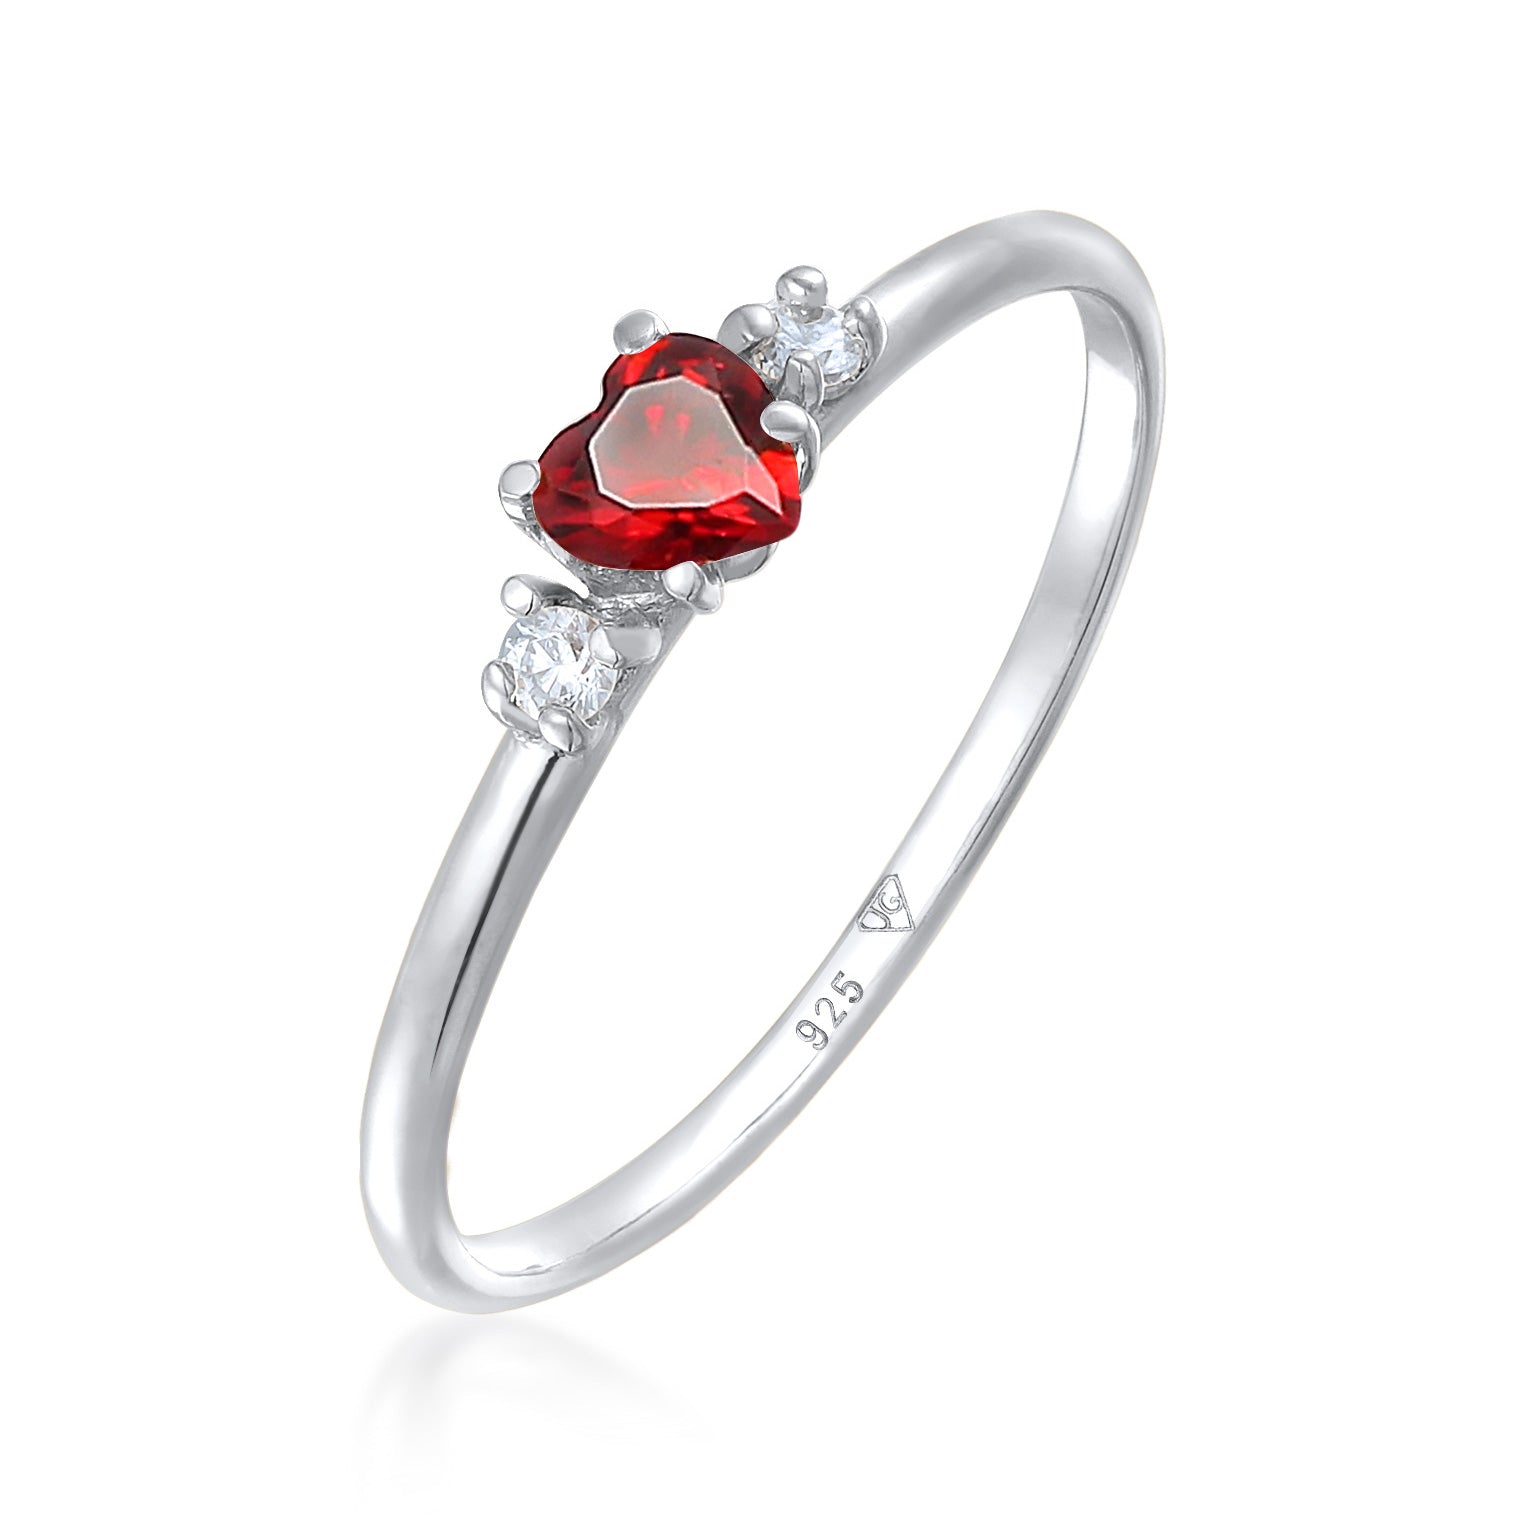 Silber - Elli | Verlobungsing Herz | Zirkonia (Rot) | 925 Sterling Silber